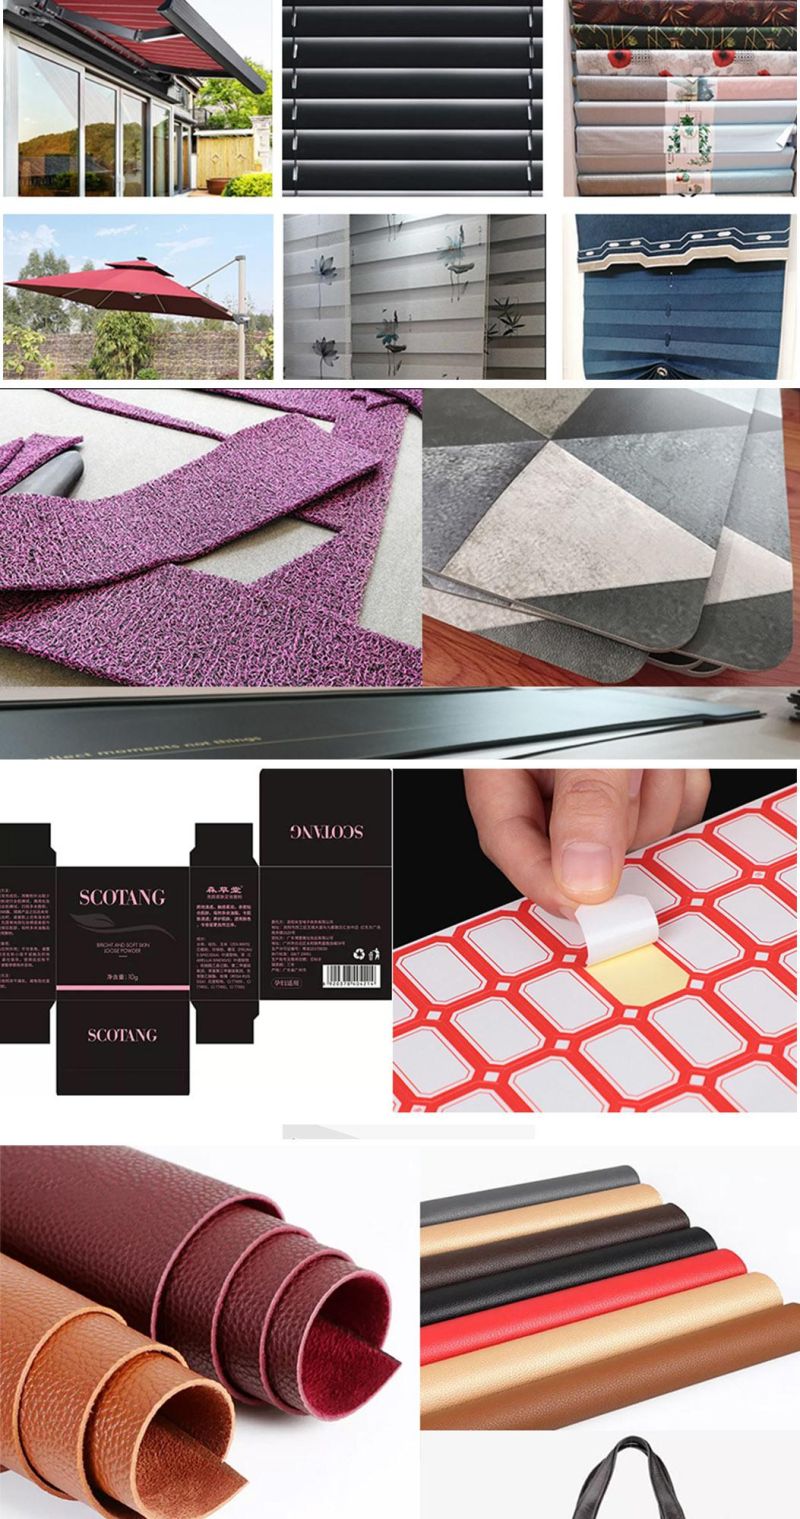 Flatbed Digital Carton Box Sample Die Cutting Machine for Paper Board and Sticker Cutting